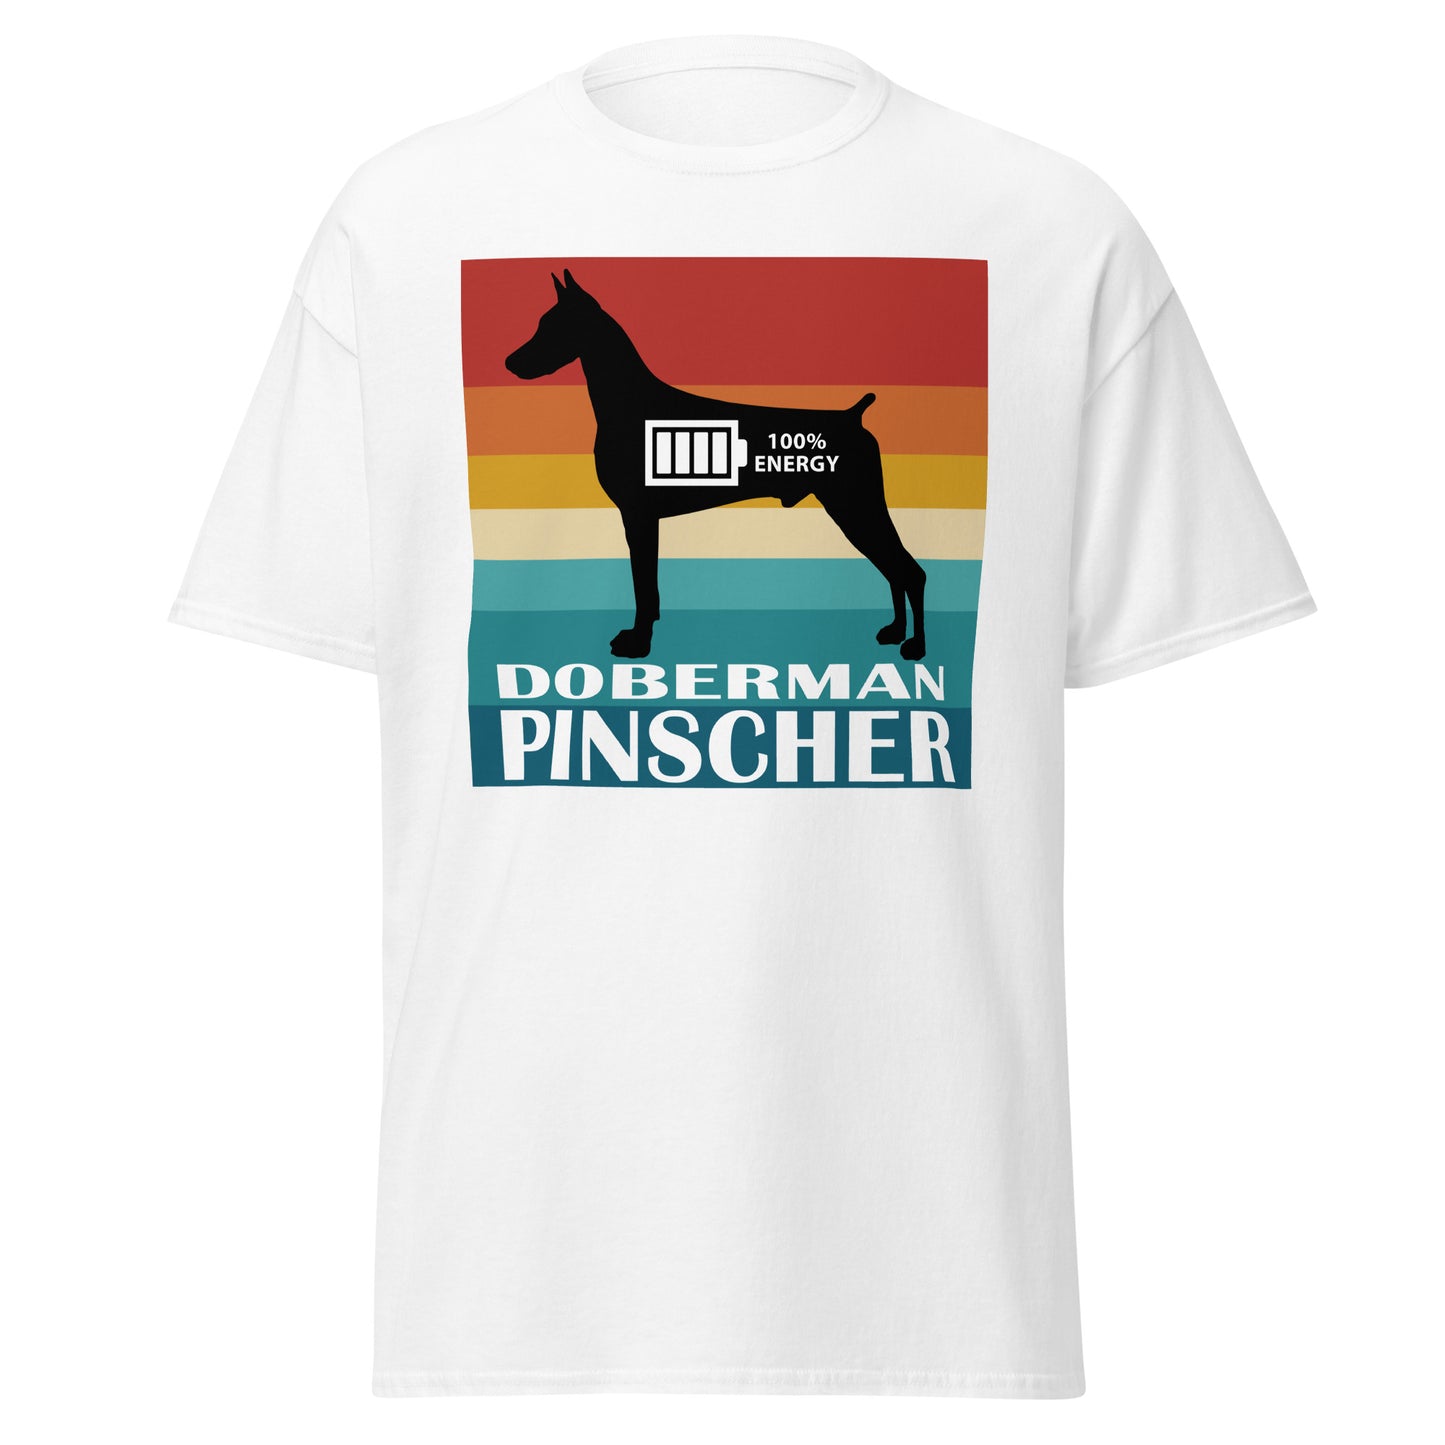 Doberman Pinscher 100% Energy Men's classic tee by Dog Artistry